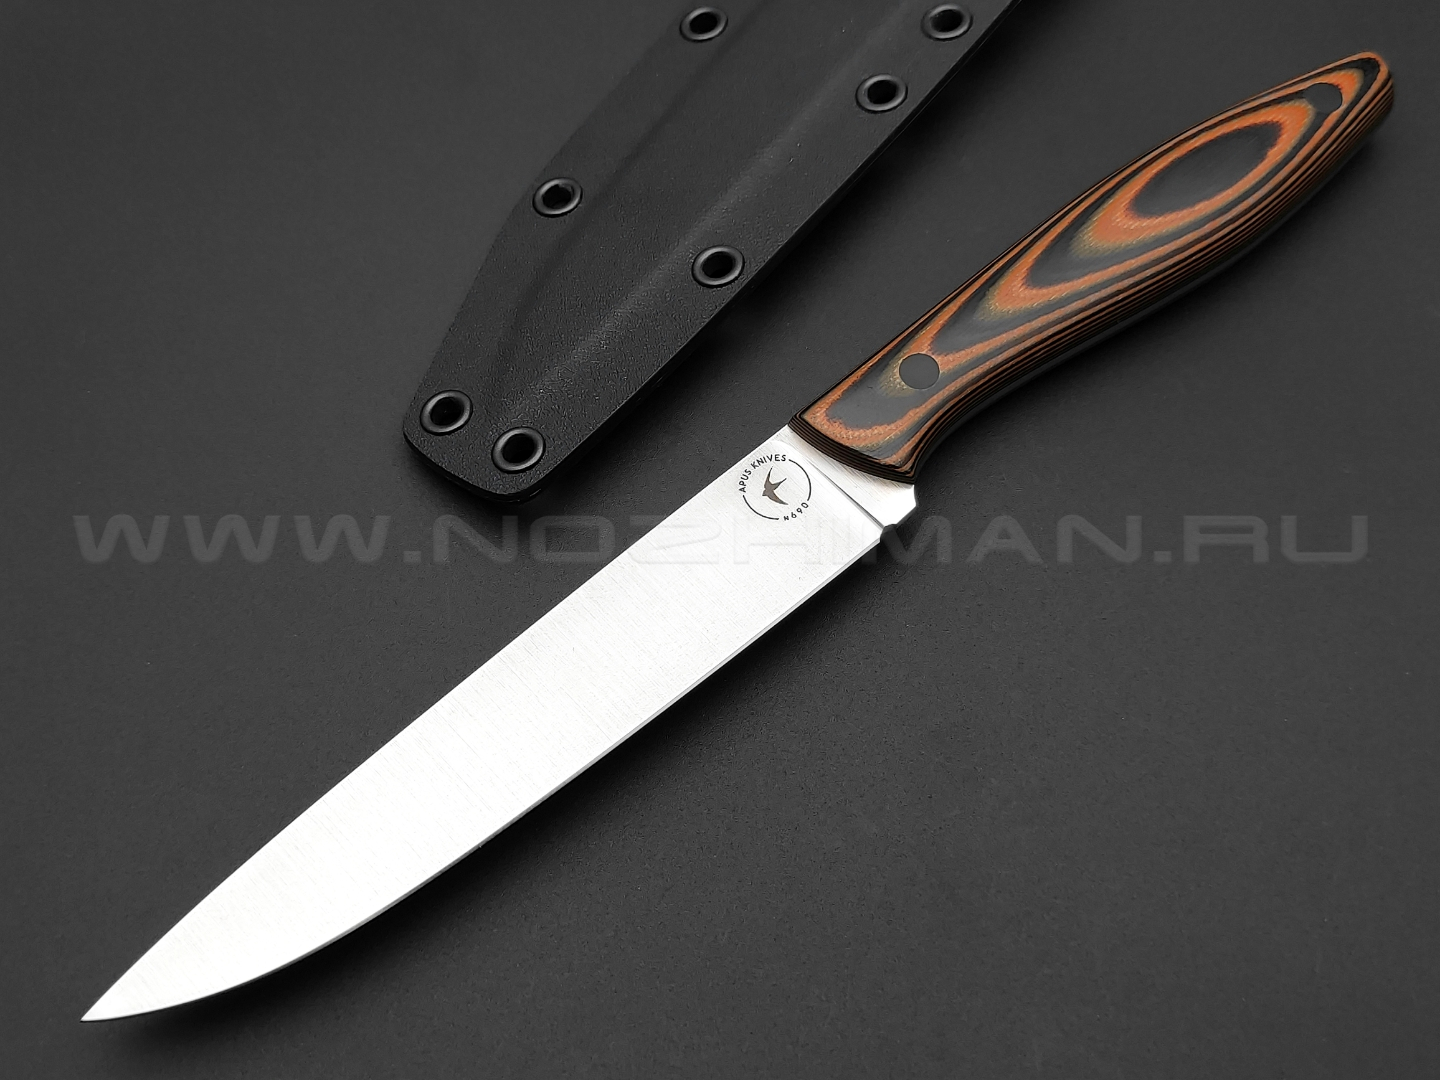 Apus Knives нож Paring Long сталь N690, рукоять G10 black & orange